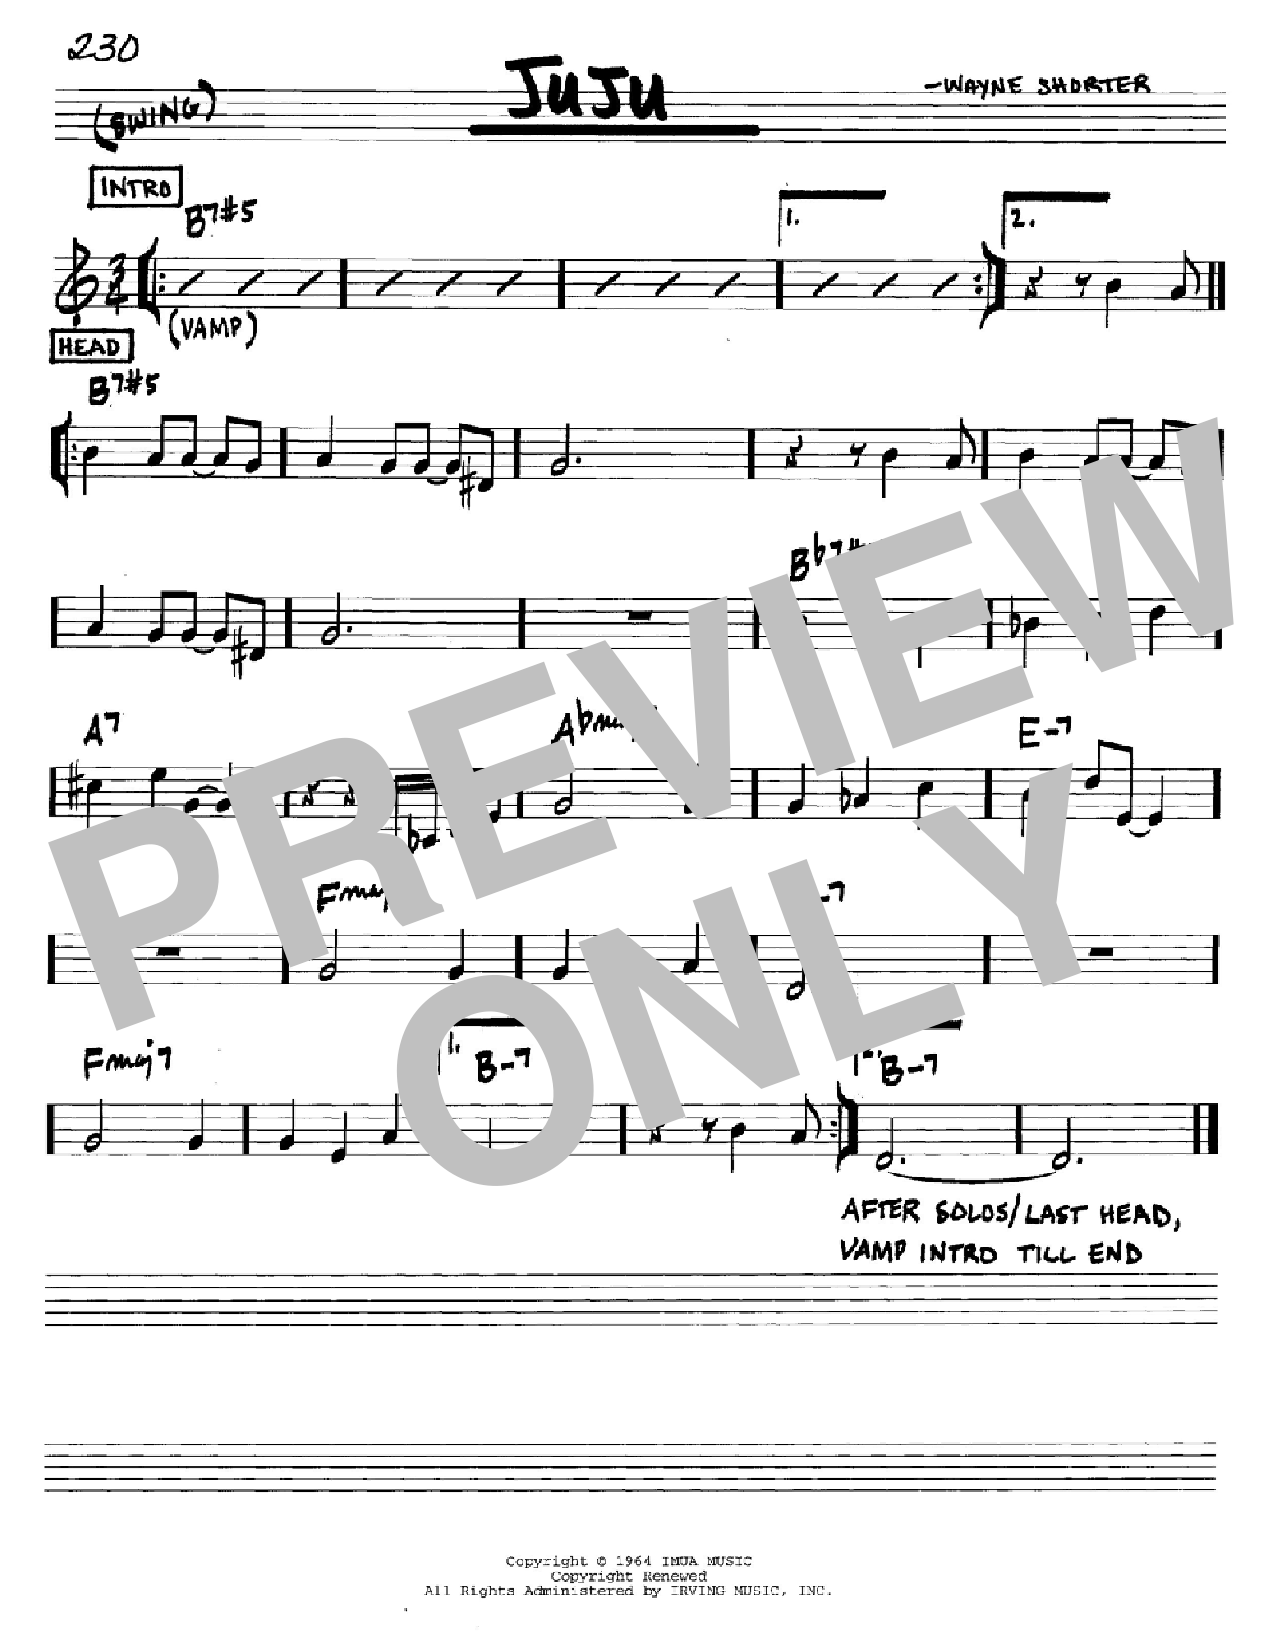 Wayne Shorter Juju Sheet Music Notes & Chords for Real Book - Melody & Chords - Eb Instruments - Download or Print PDF